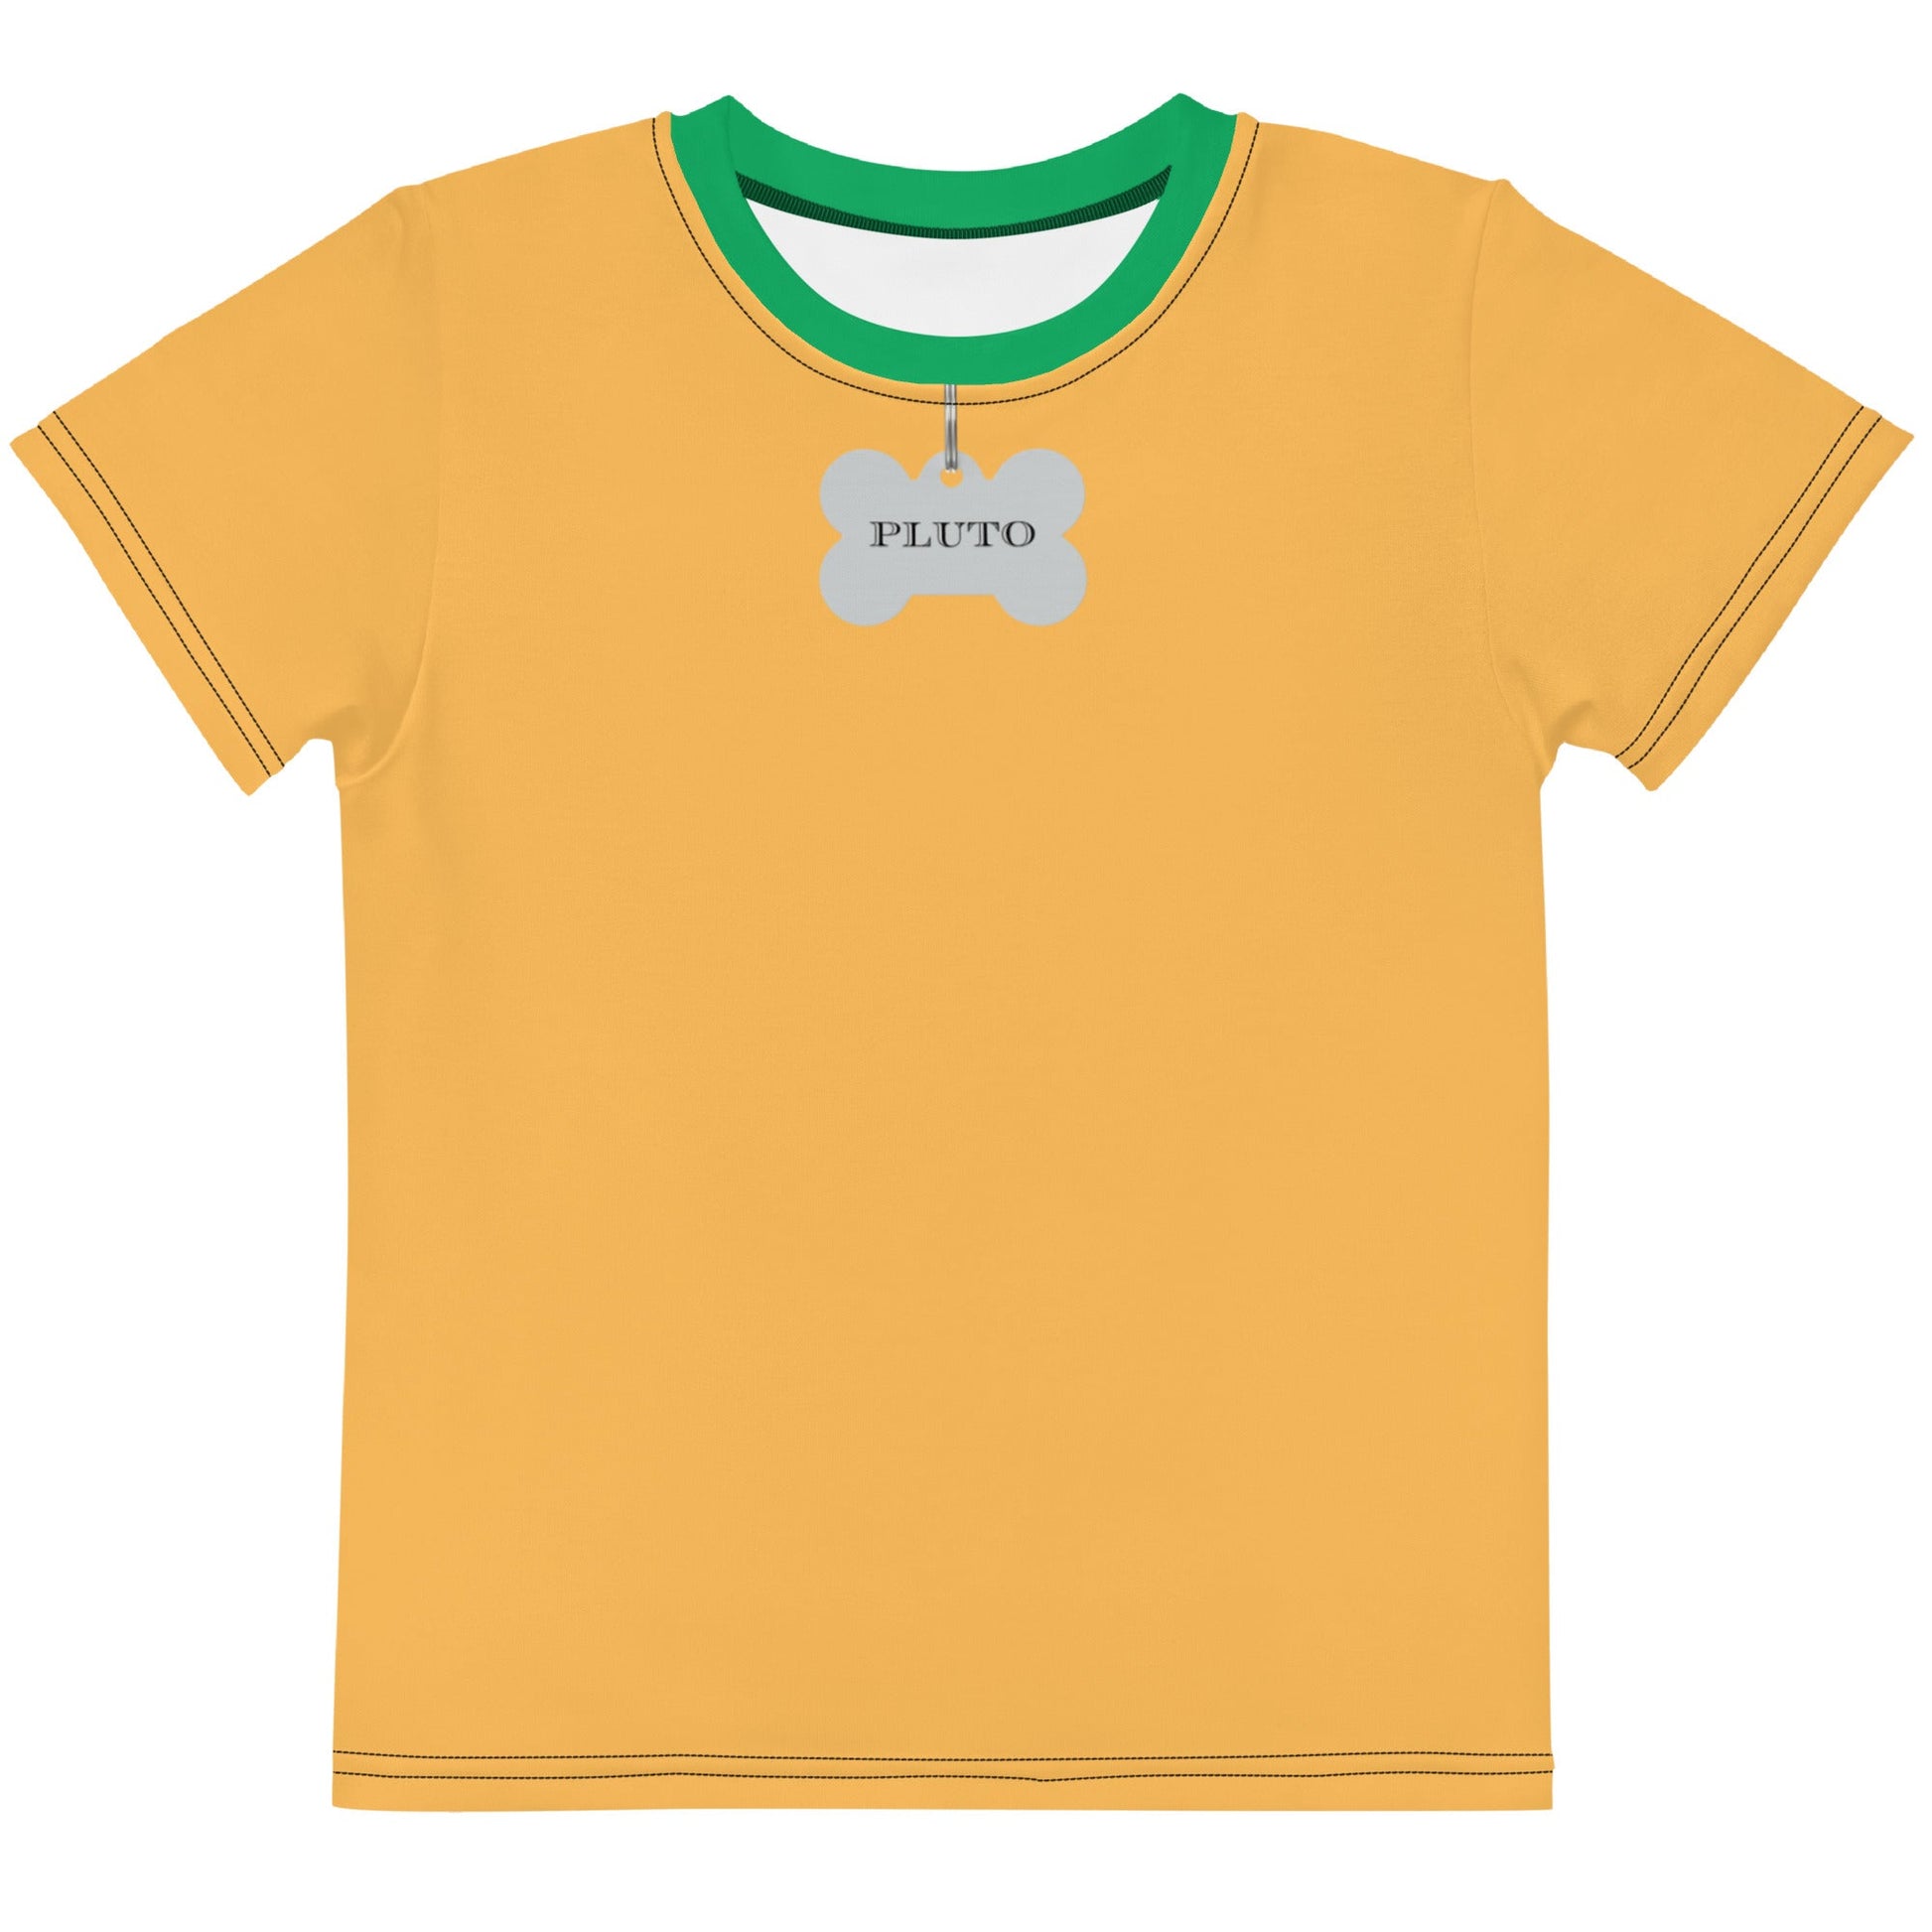 Favorite Pal Kids crew neck t-shirt boo to youcartoon characterdisney bounding#tag4##tag5##tag6#